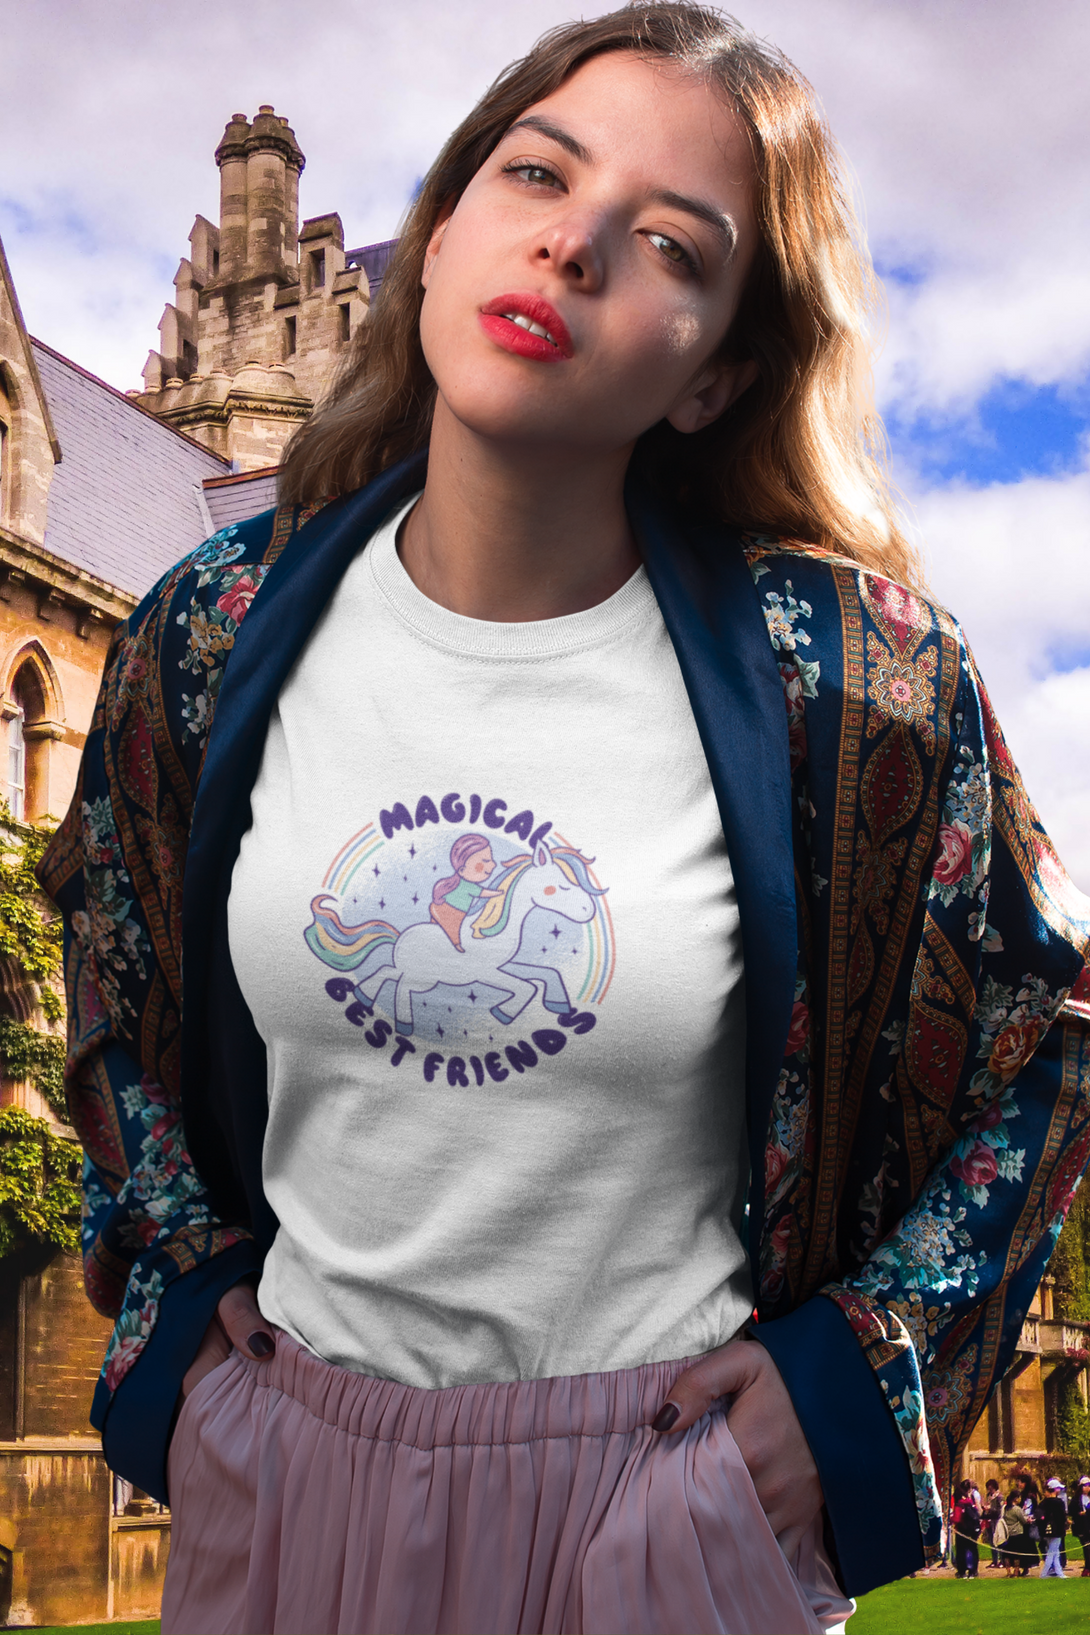 Magical Friend Printed T-Shirt For Women - WowWaves - 4